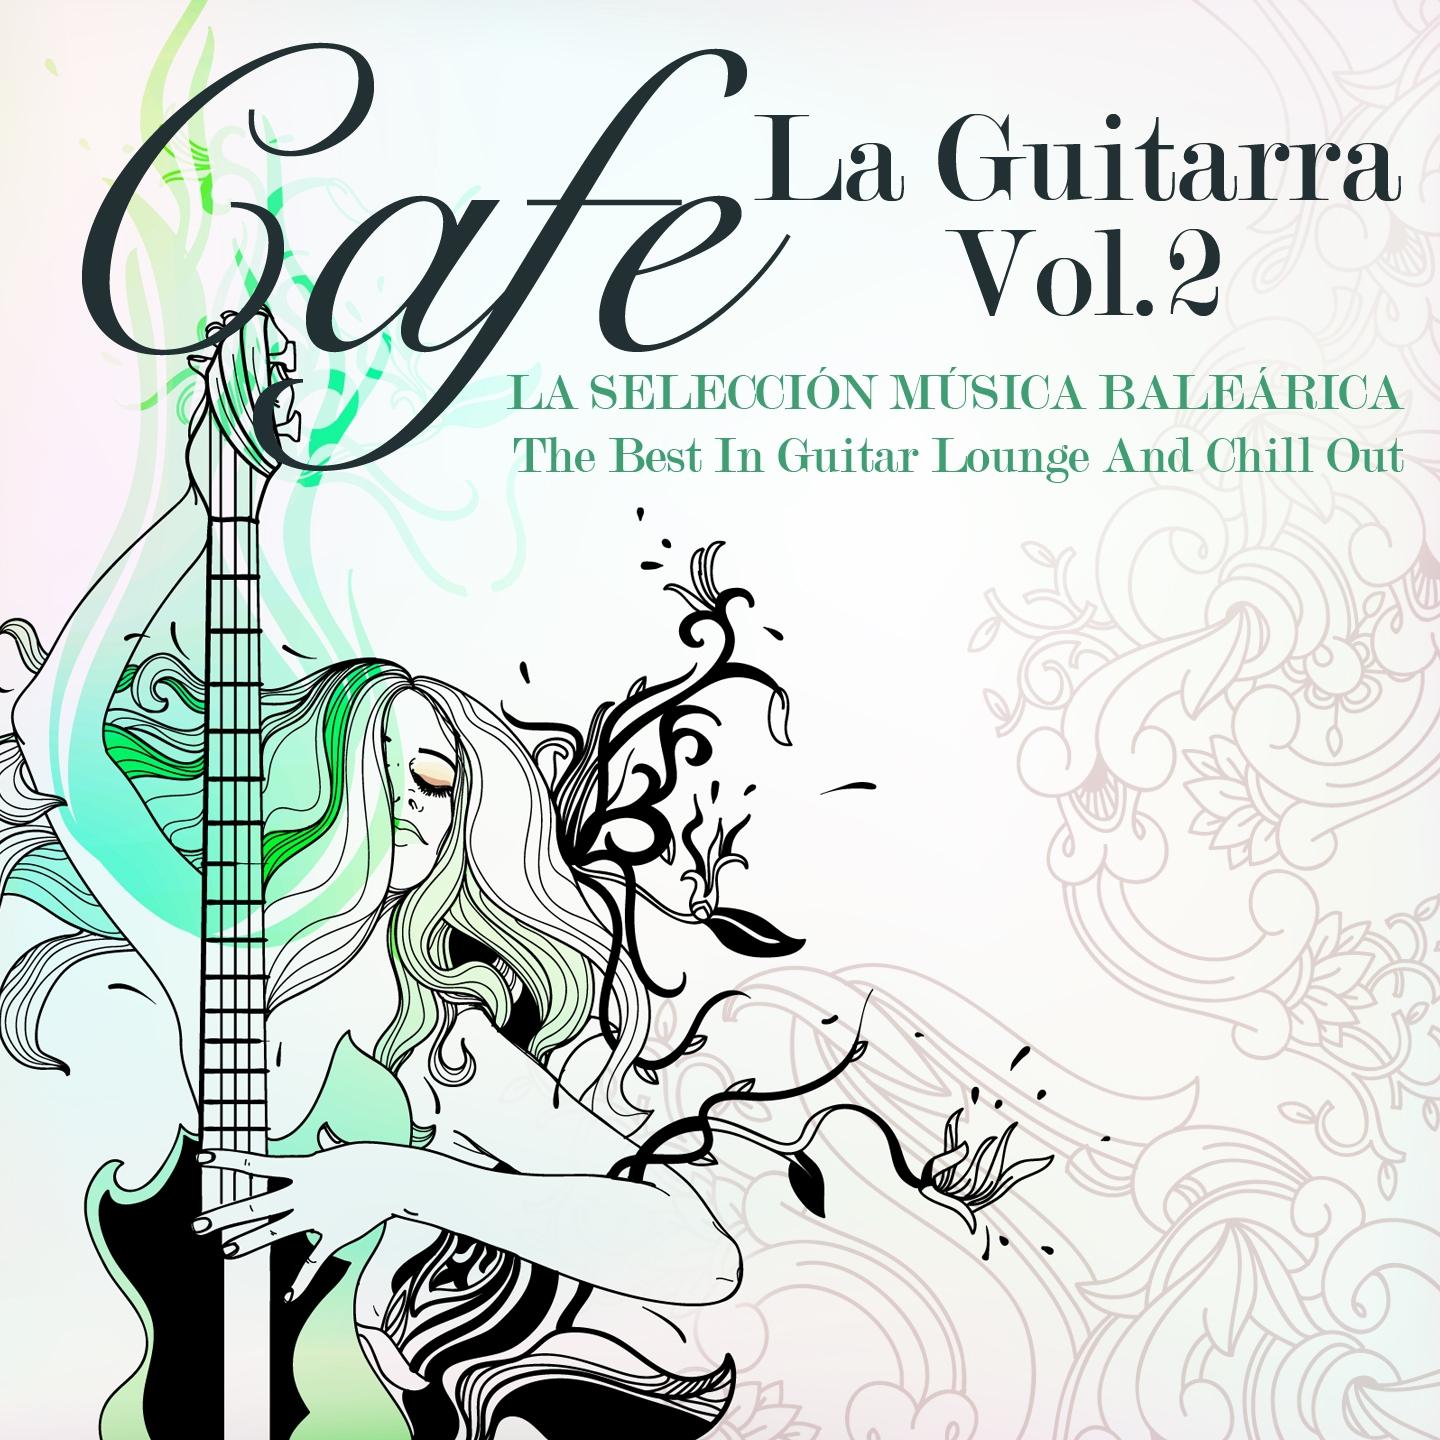 Cafe La Guitarra, Vol. 2 La Seleccio n Mu sica Balea rica, The Best in Guitar Lounge and Chill Out